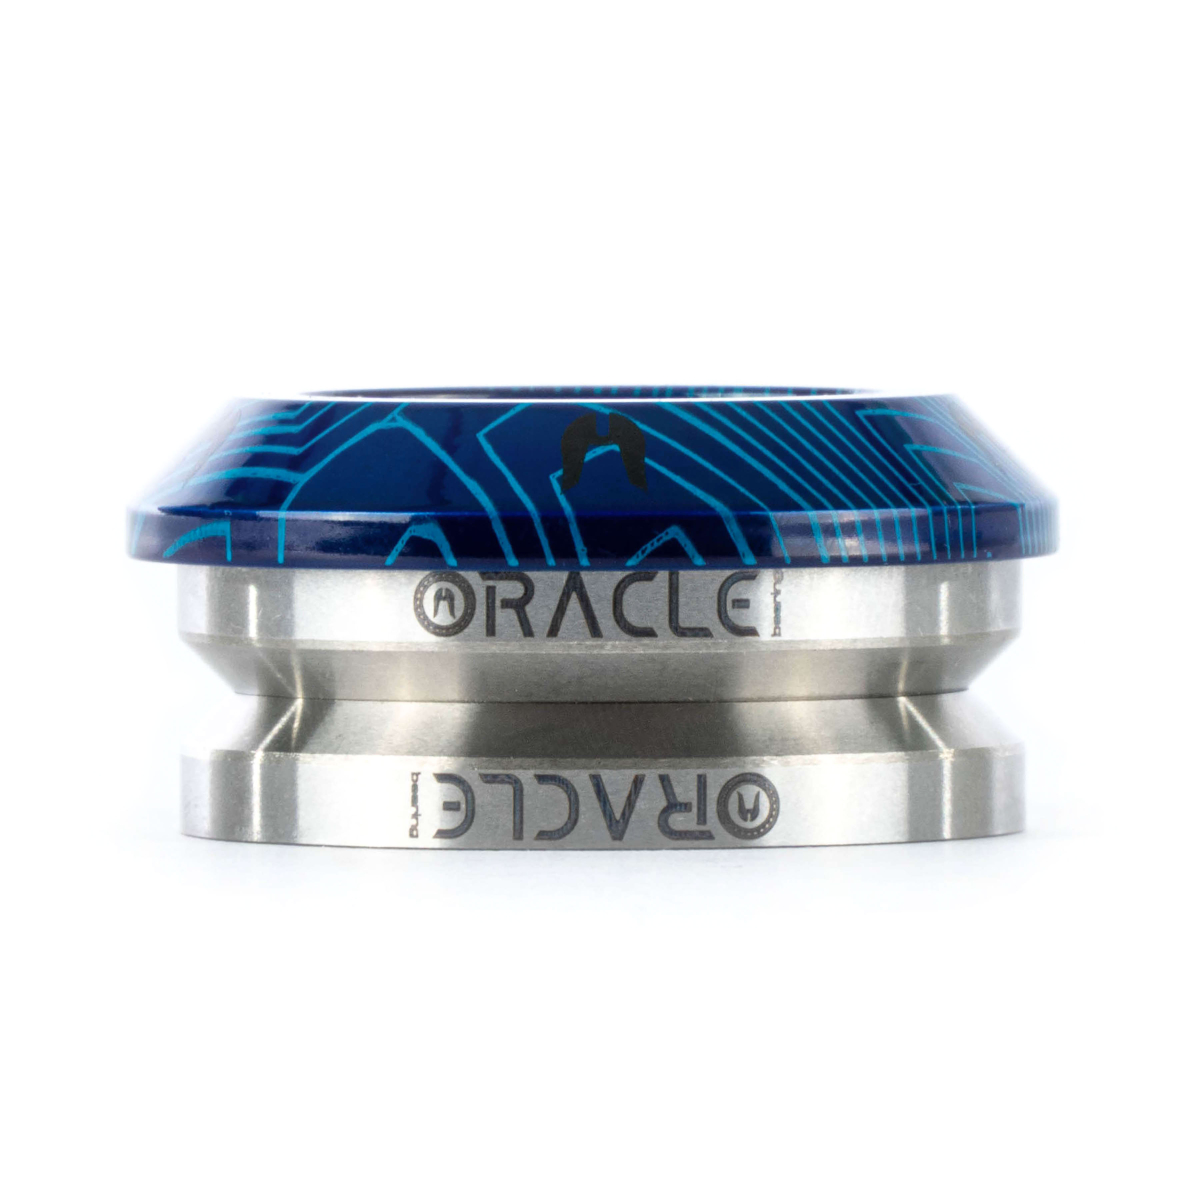 Ethic DTC Headset Oracle Bleu